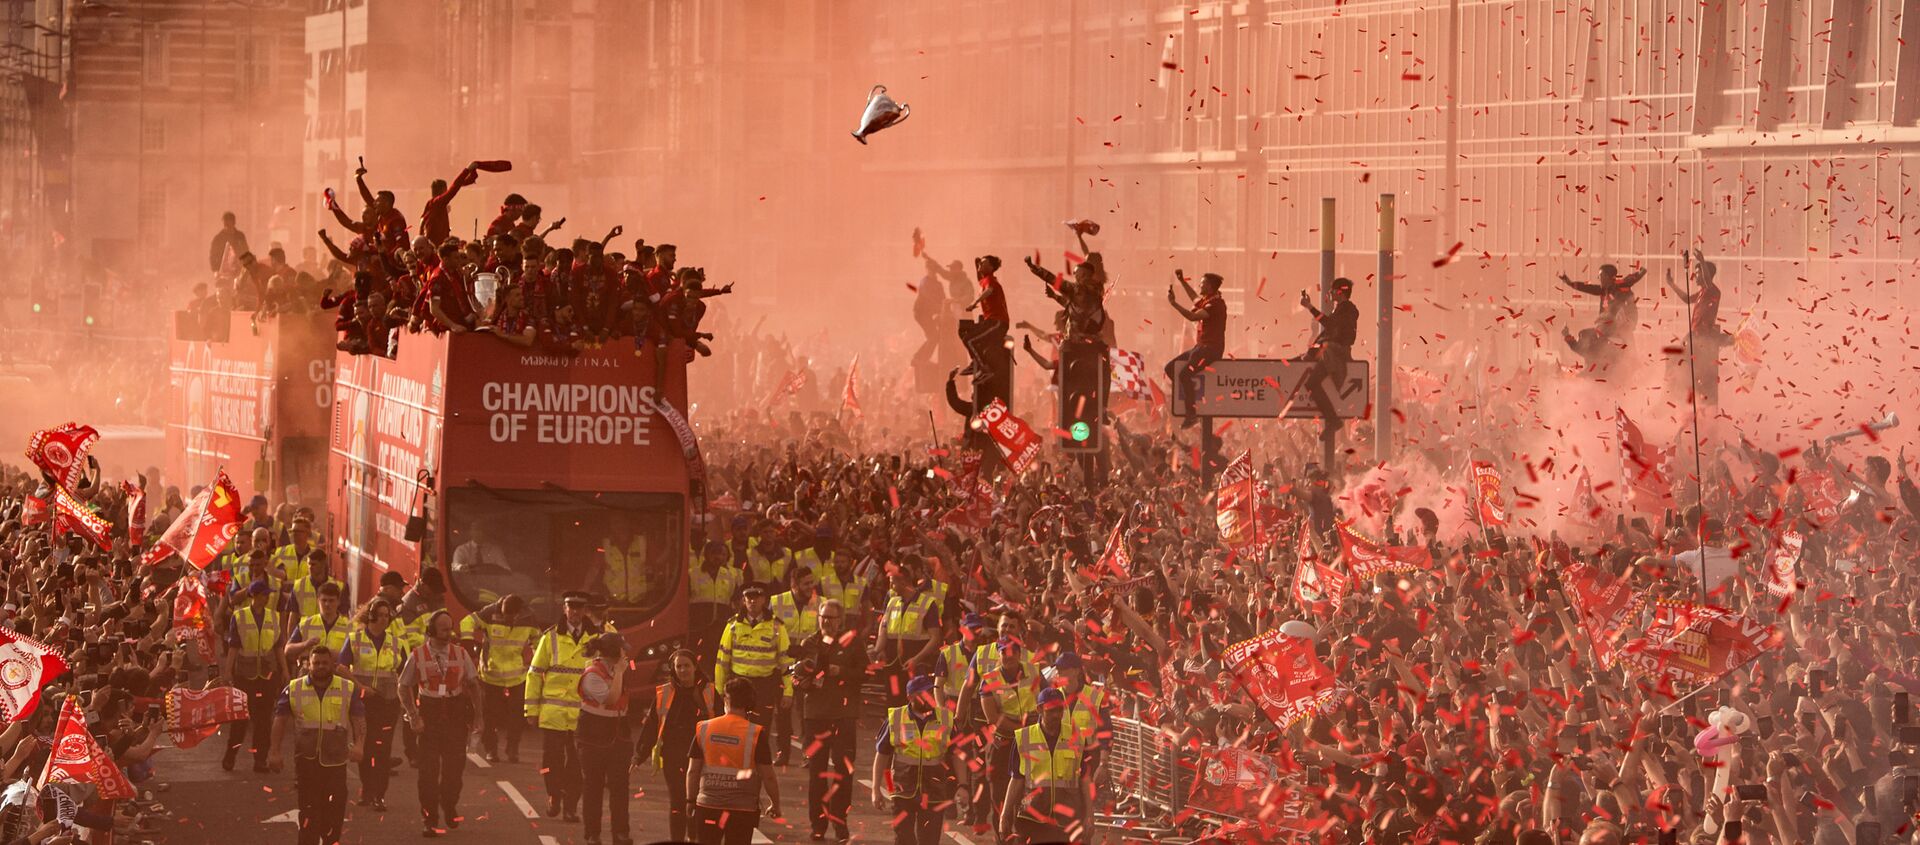 Снимок Liverpool Champions League Victory Parade фотографа Oli Scarff, занявший 3-е место конкурса World Press Photo 2020 в категории Sports - اسپوتنیک افغانستان  , 1920, 14.04.2021